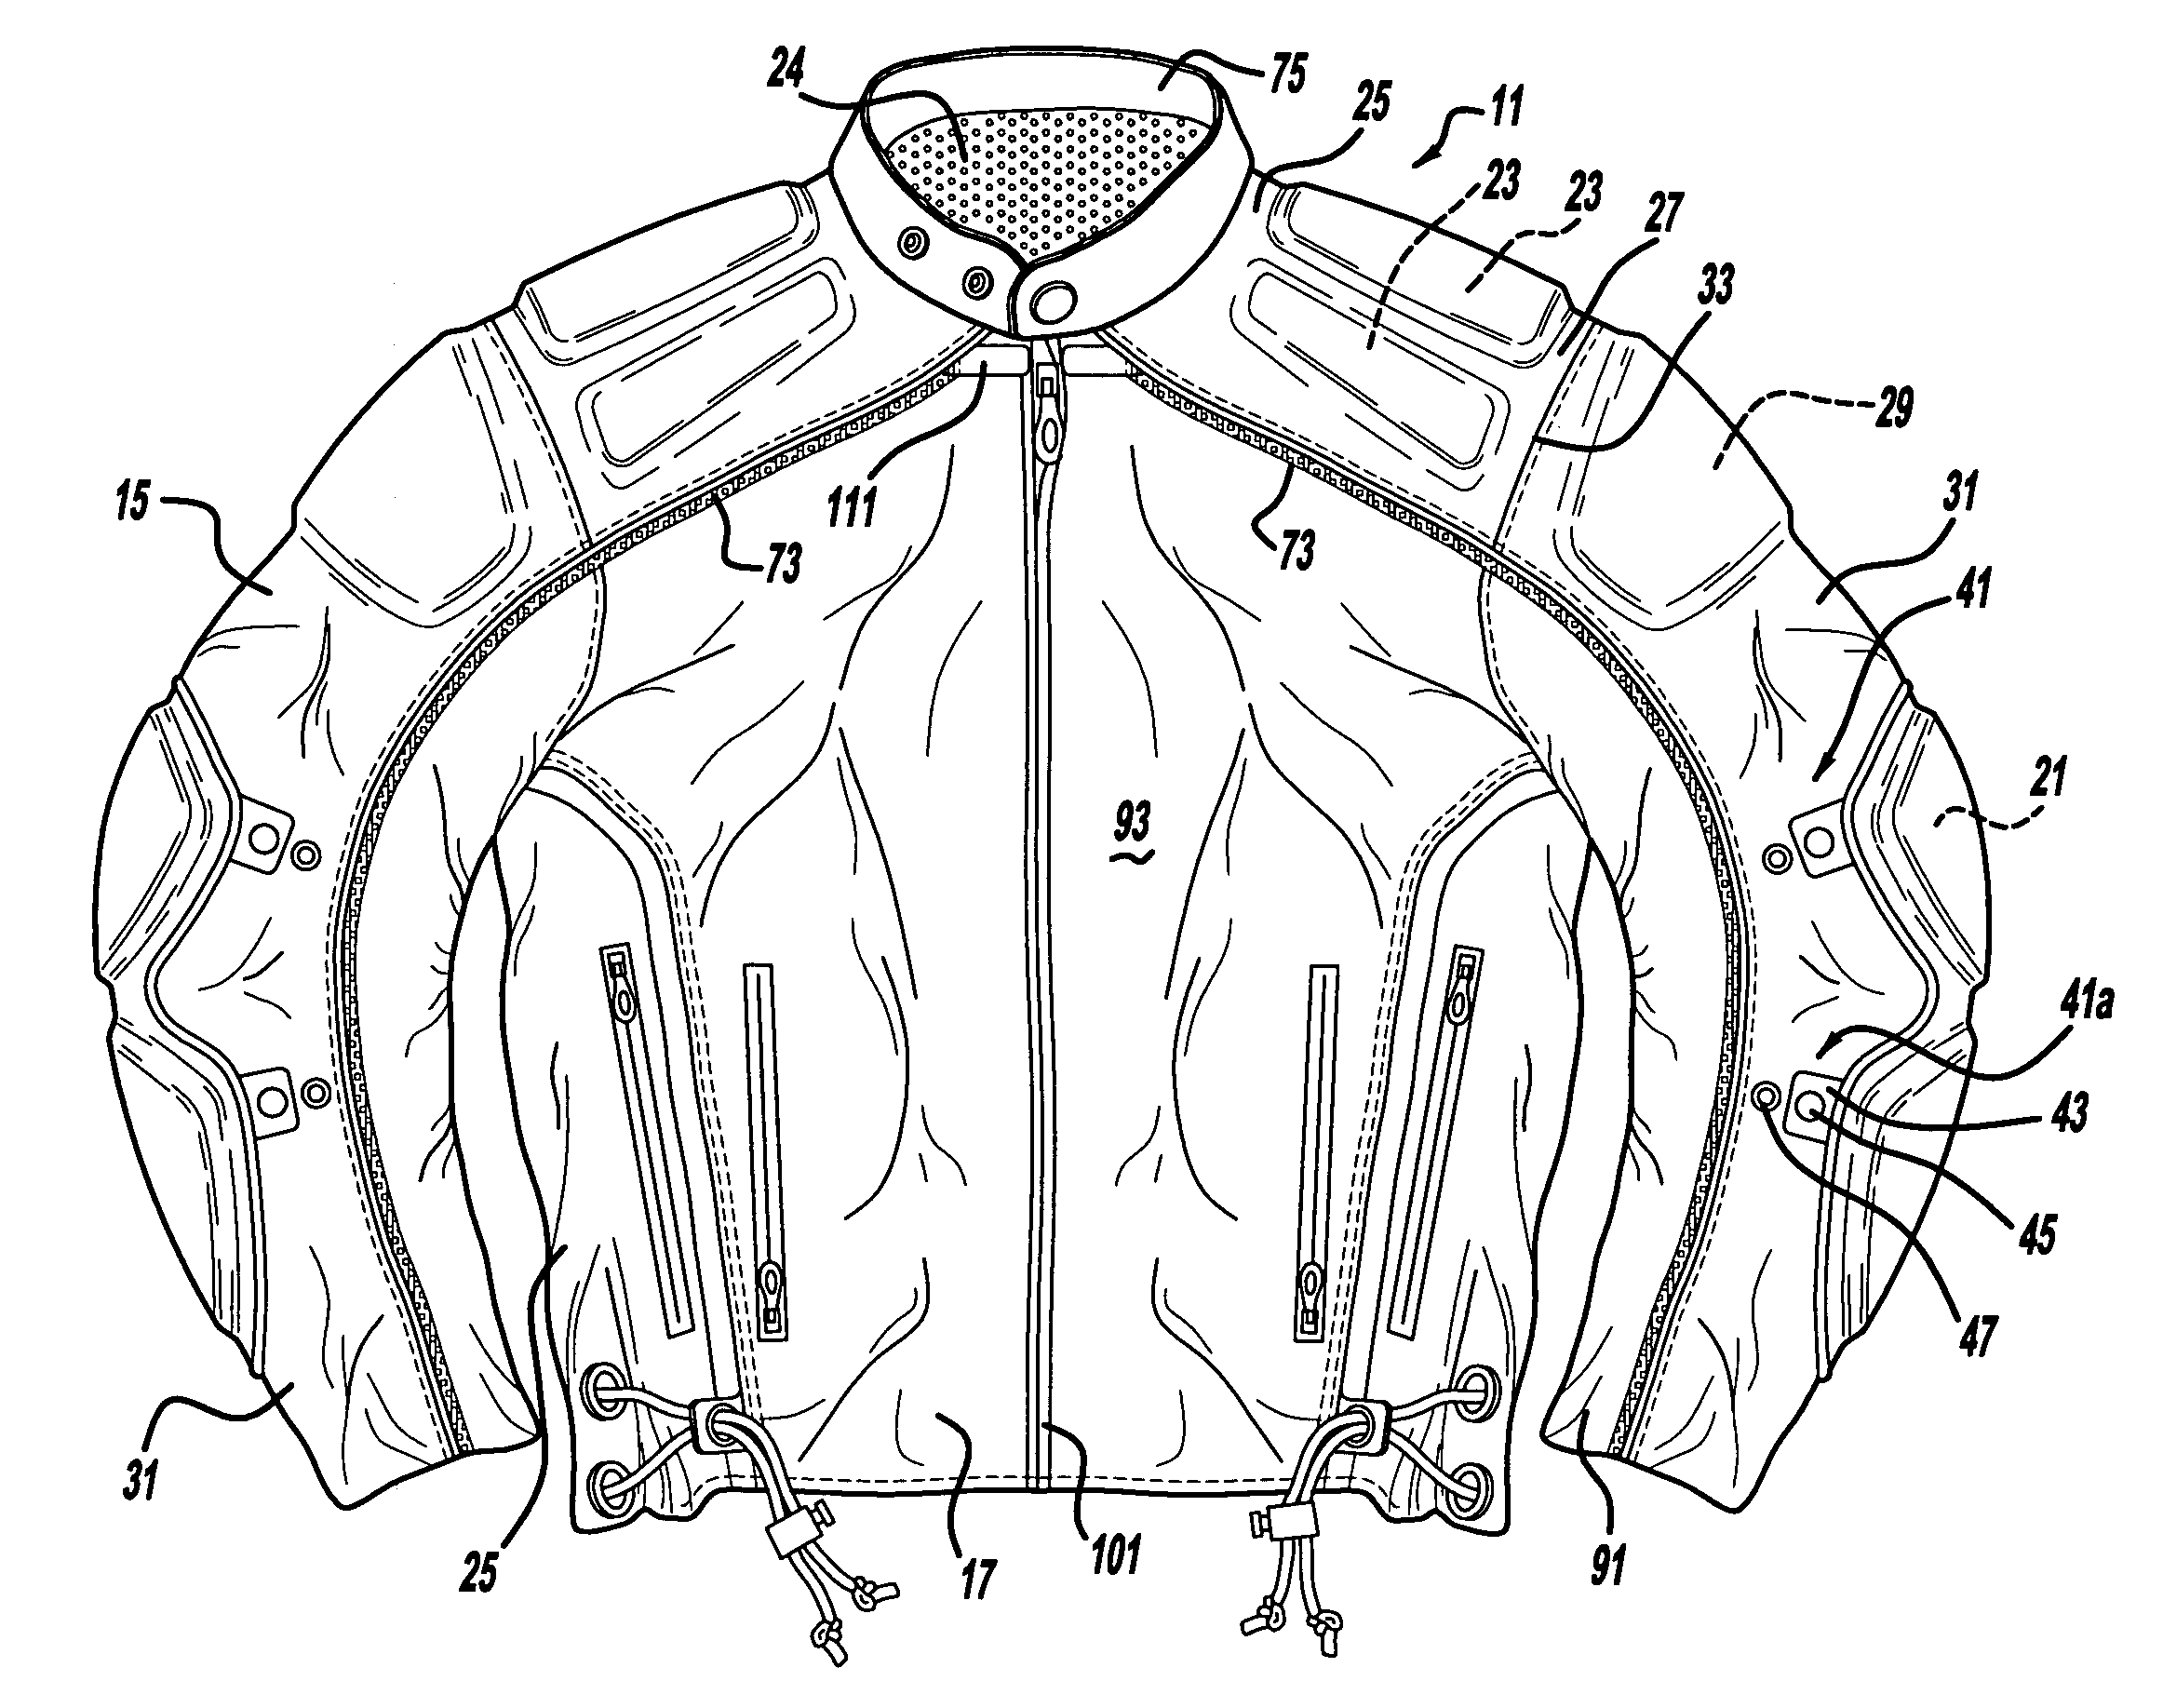 Hybrid ventilated garment